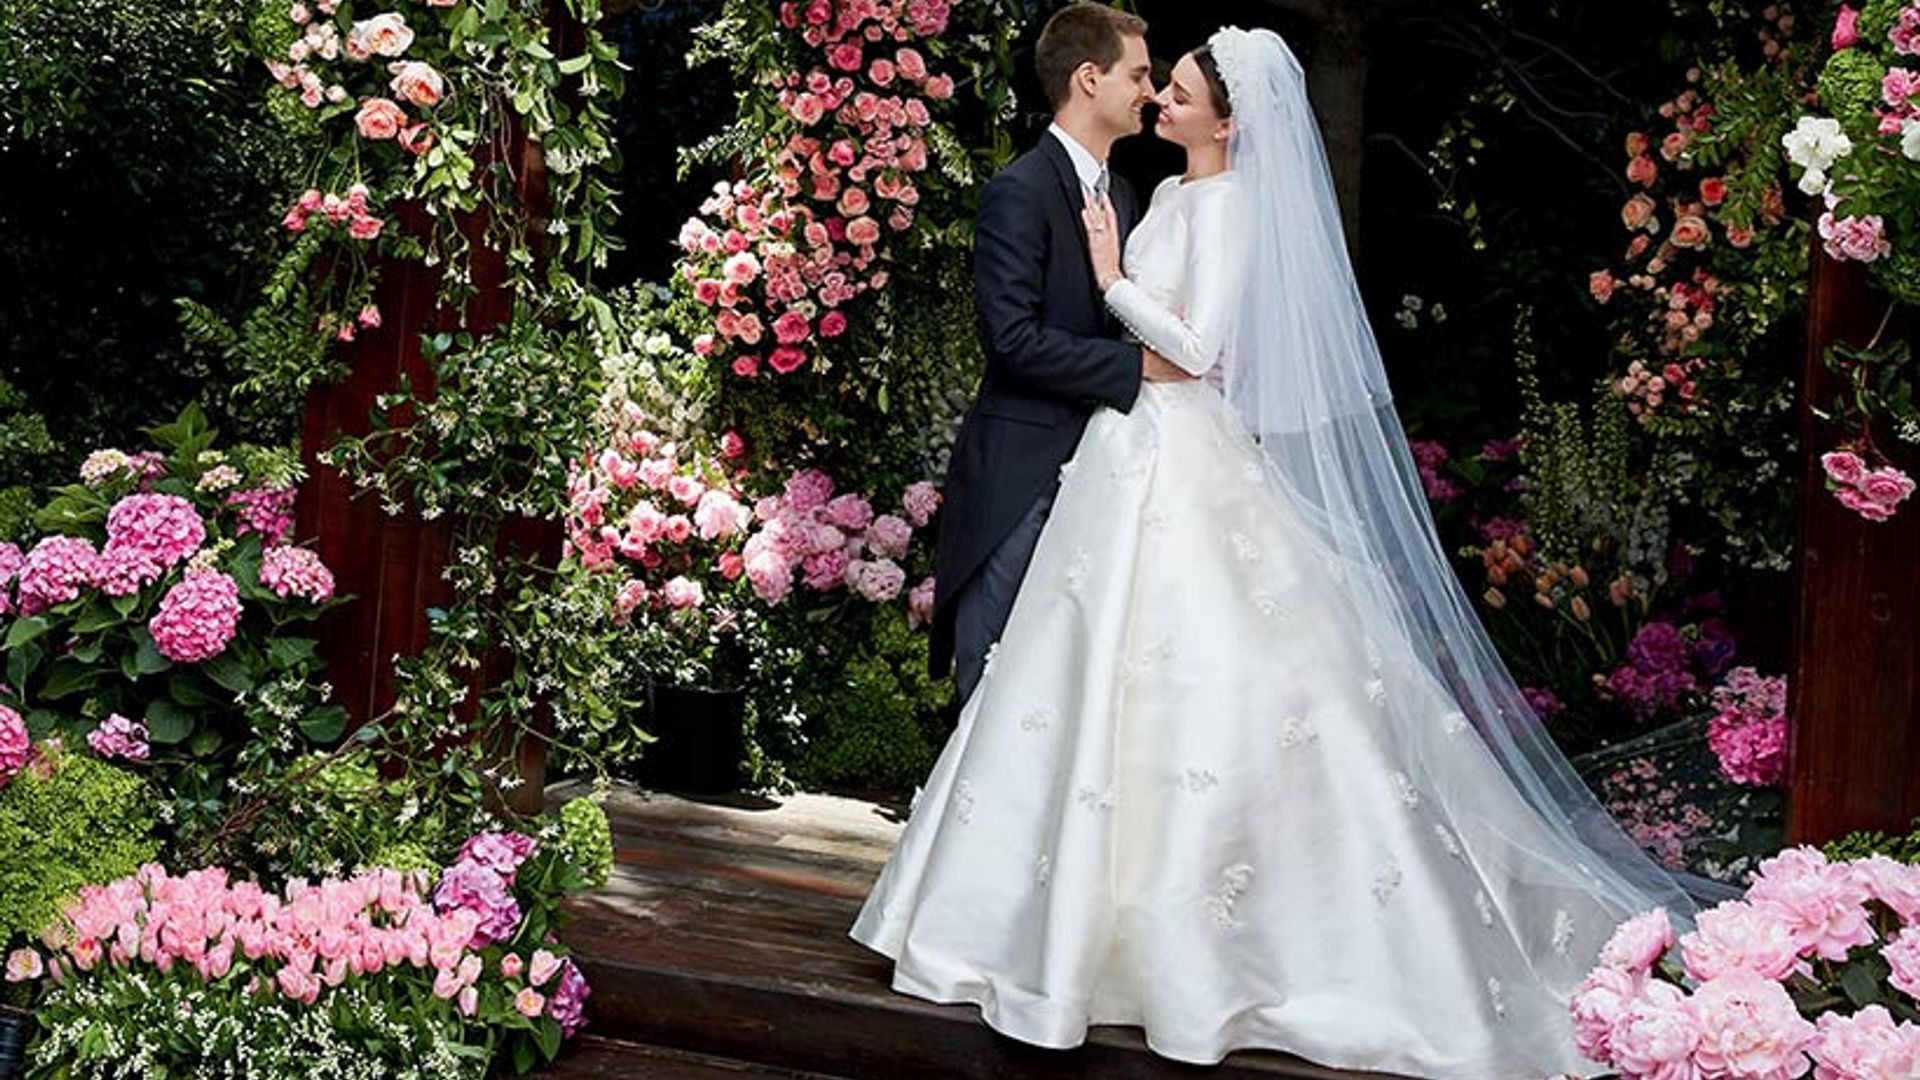 Miranda Kerr shares stunning wedding photos on anniversary with Evan Spiegel